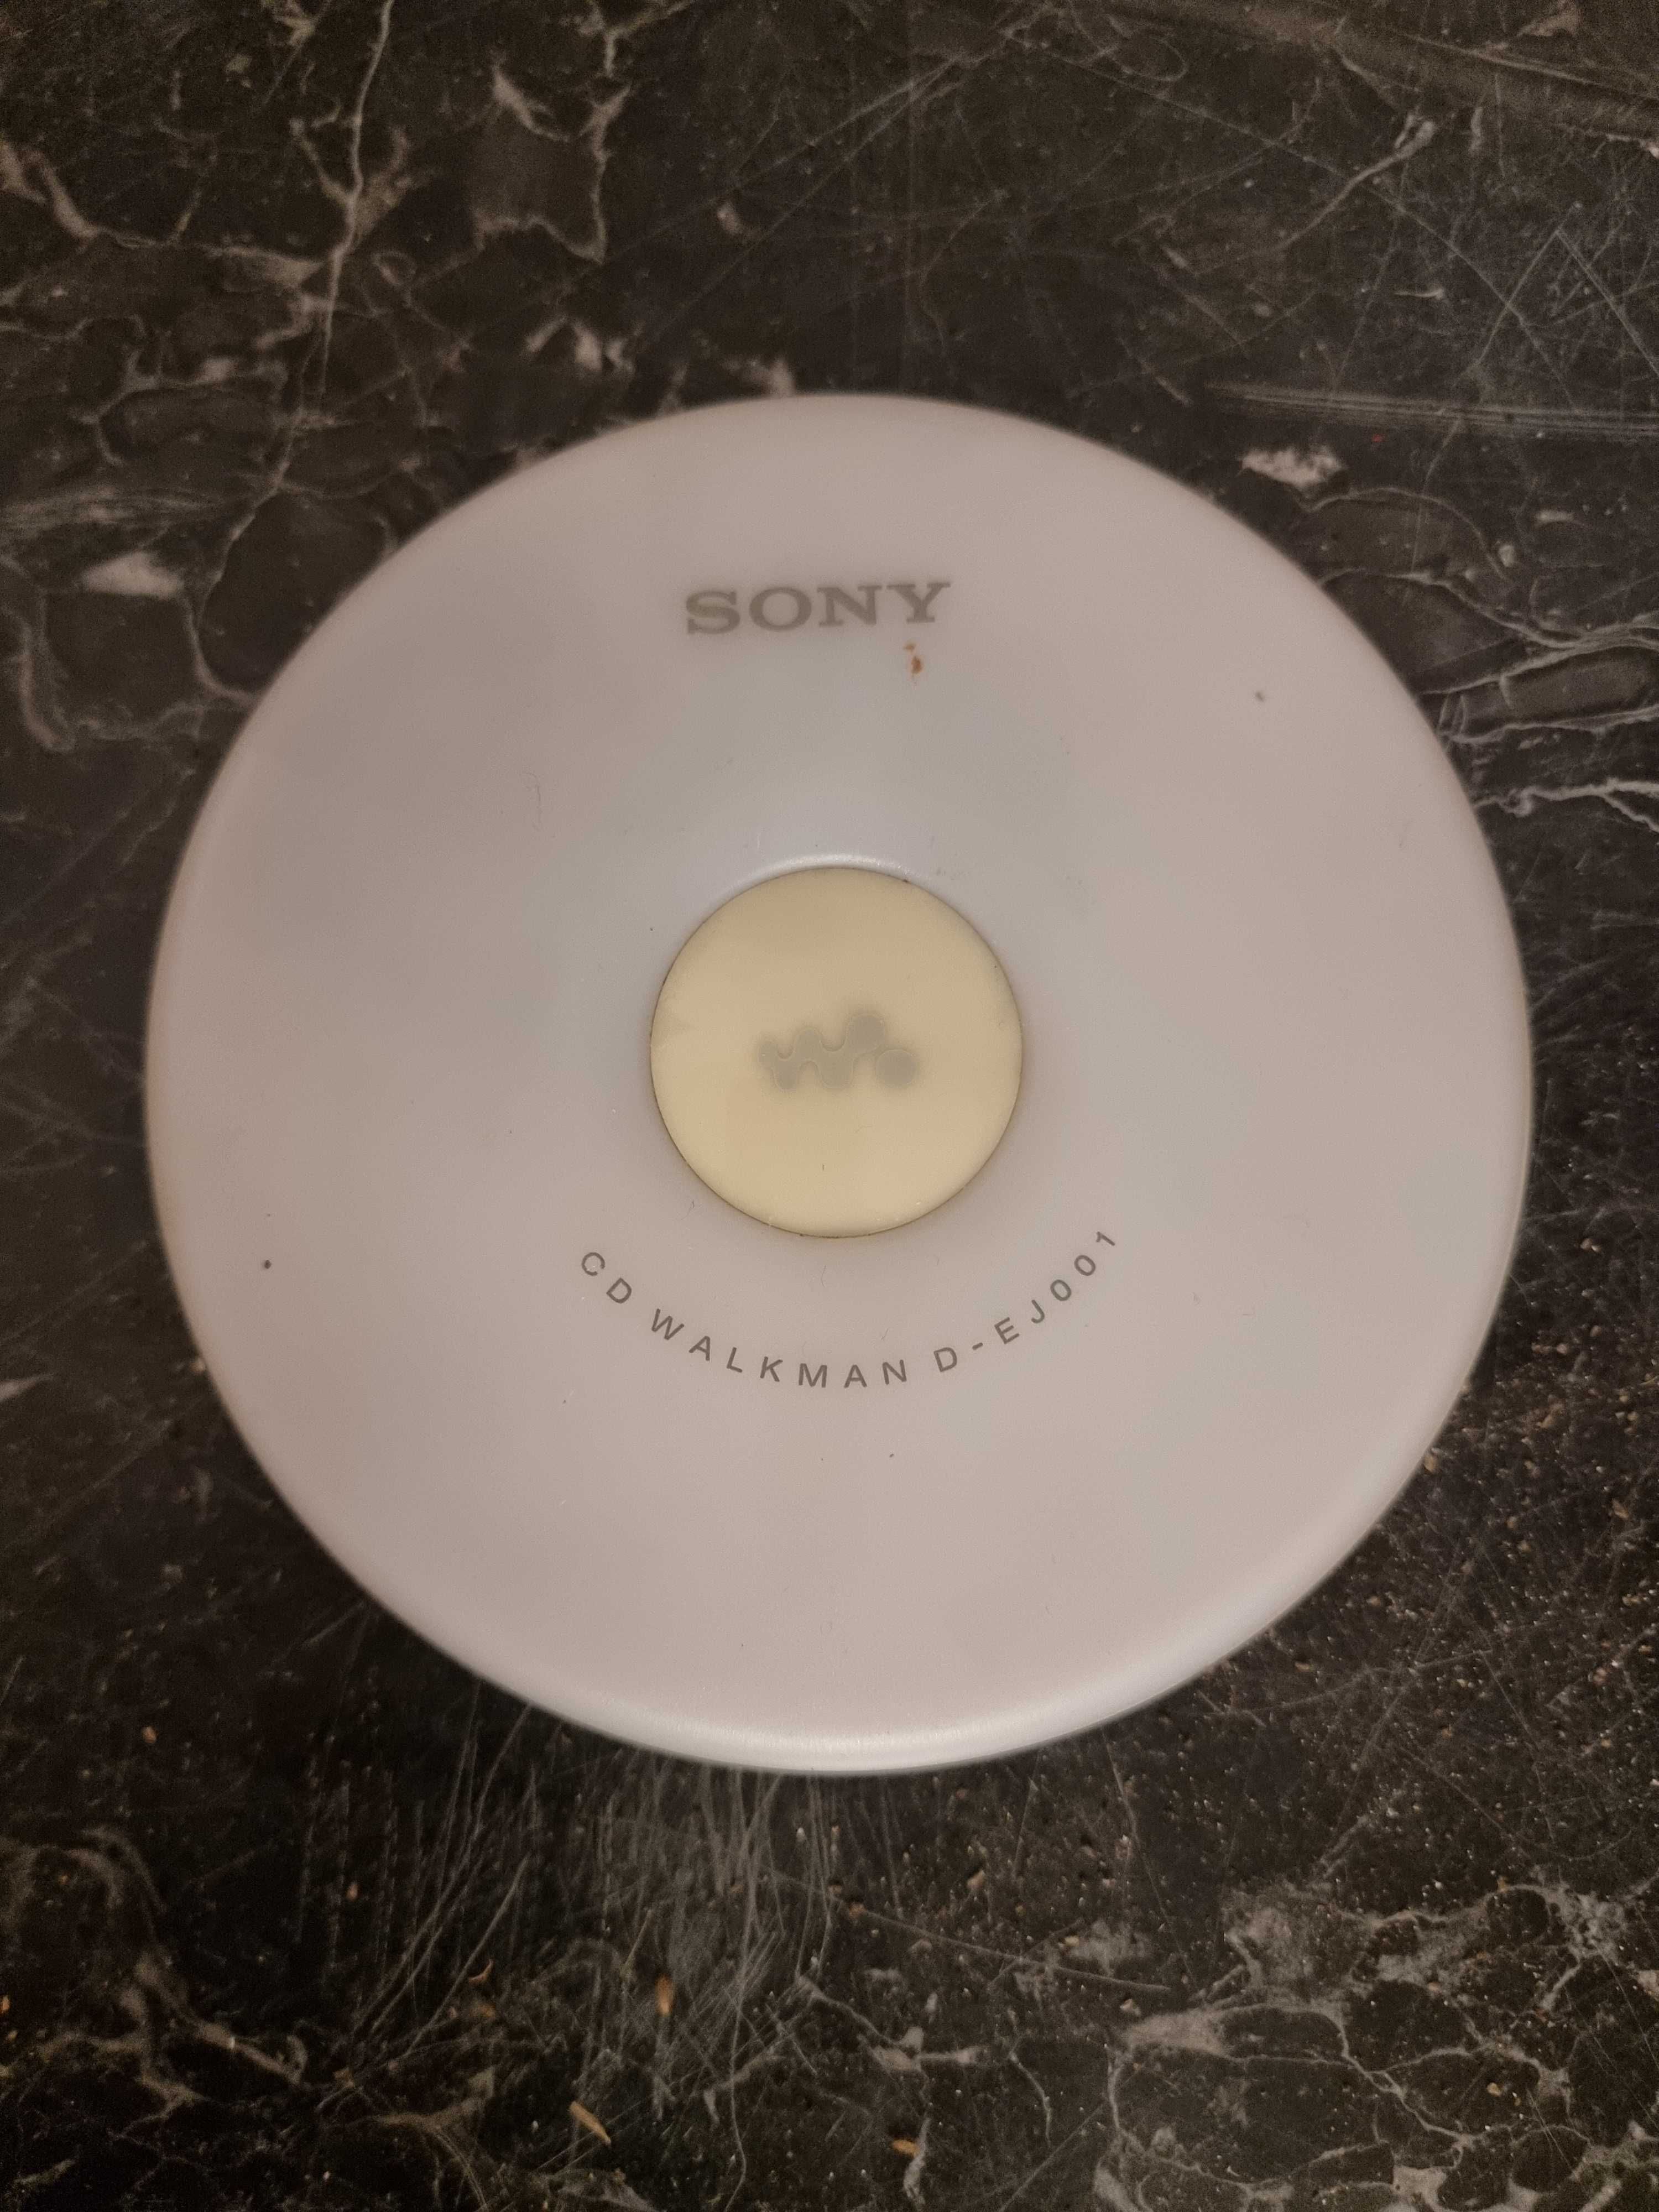 CD Walkman Sony D-E001 Vintage